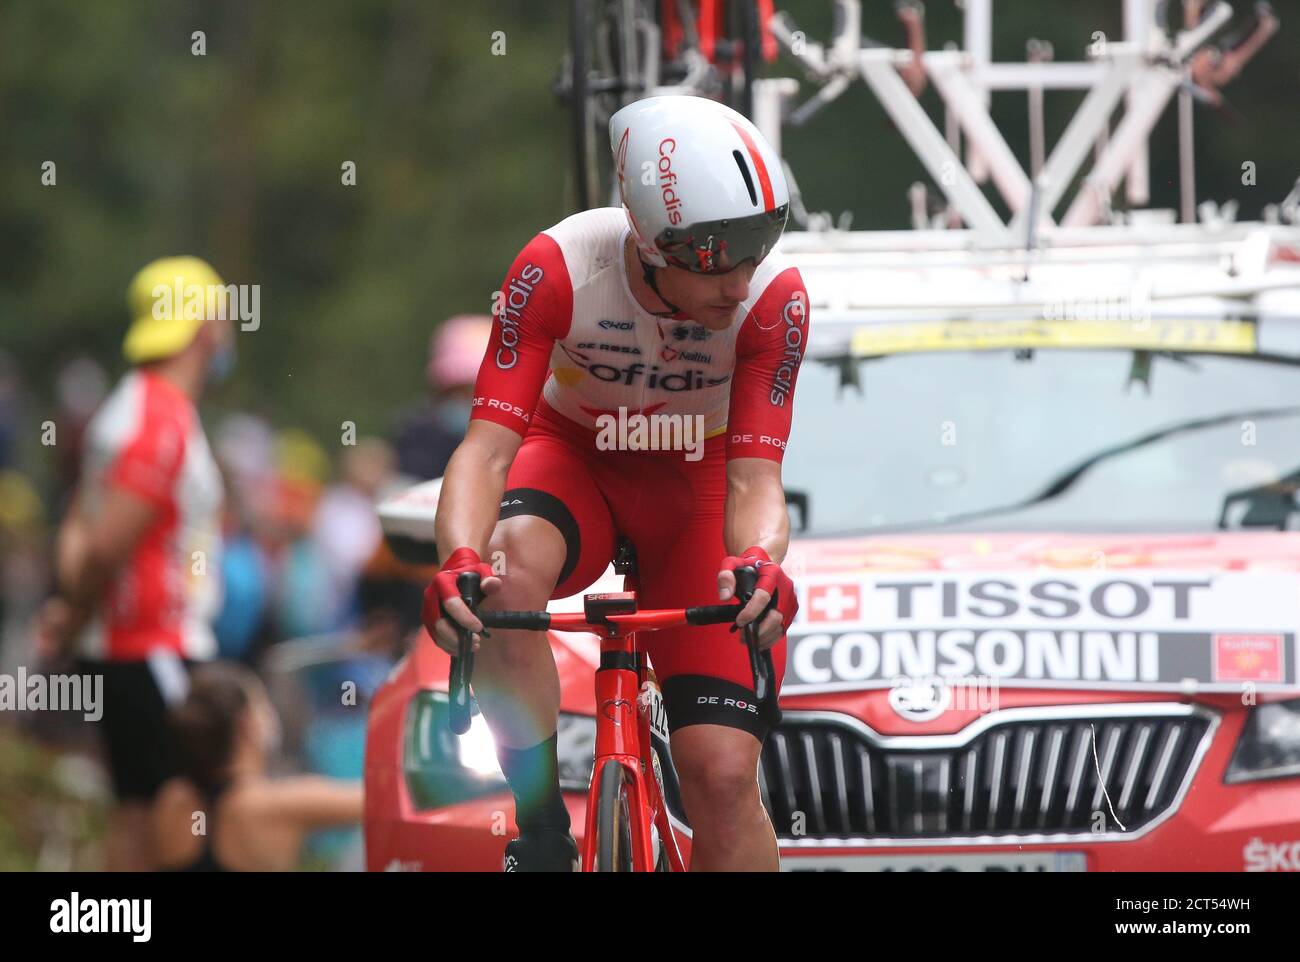 Simone Consonni de Cofidis durante el Tour de Francia 2020, carrera en  bicicleta etapa 20, Time Trial, Lure - la Planche des Belles Filles (36,2  km) el 19 de septiembre de 2020